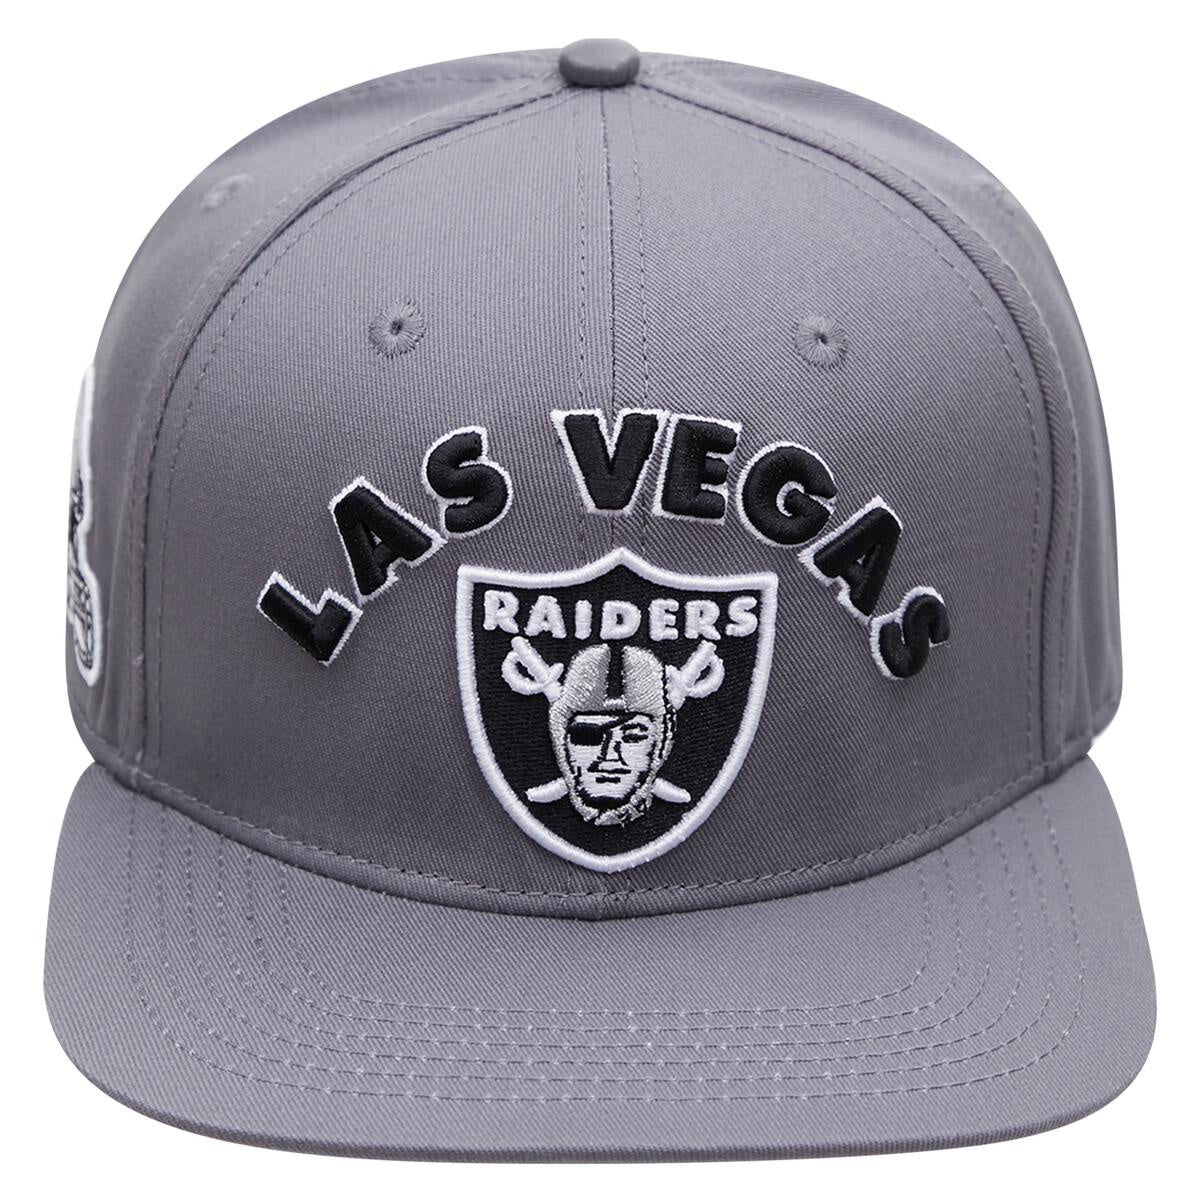 Las Vegas Raiders Hat